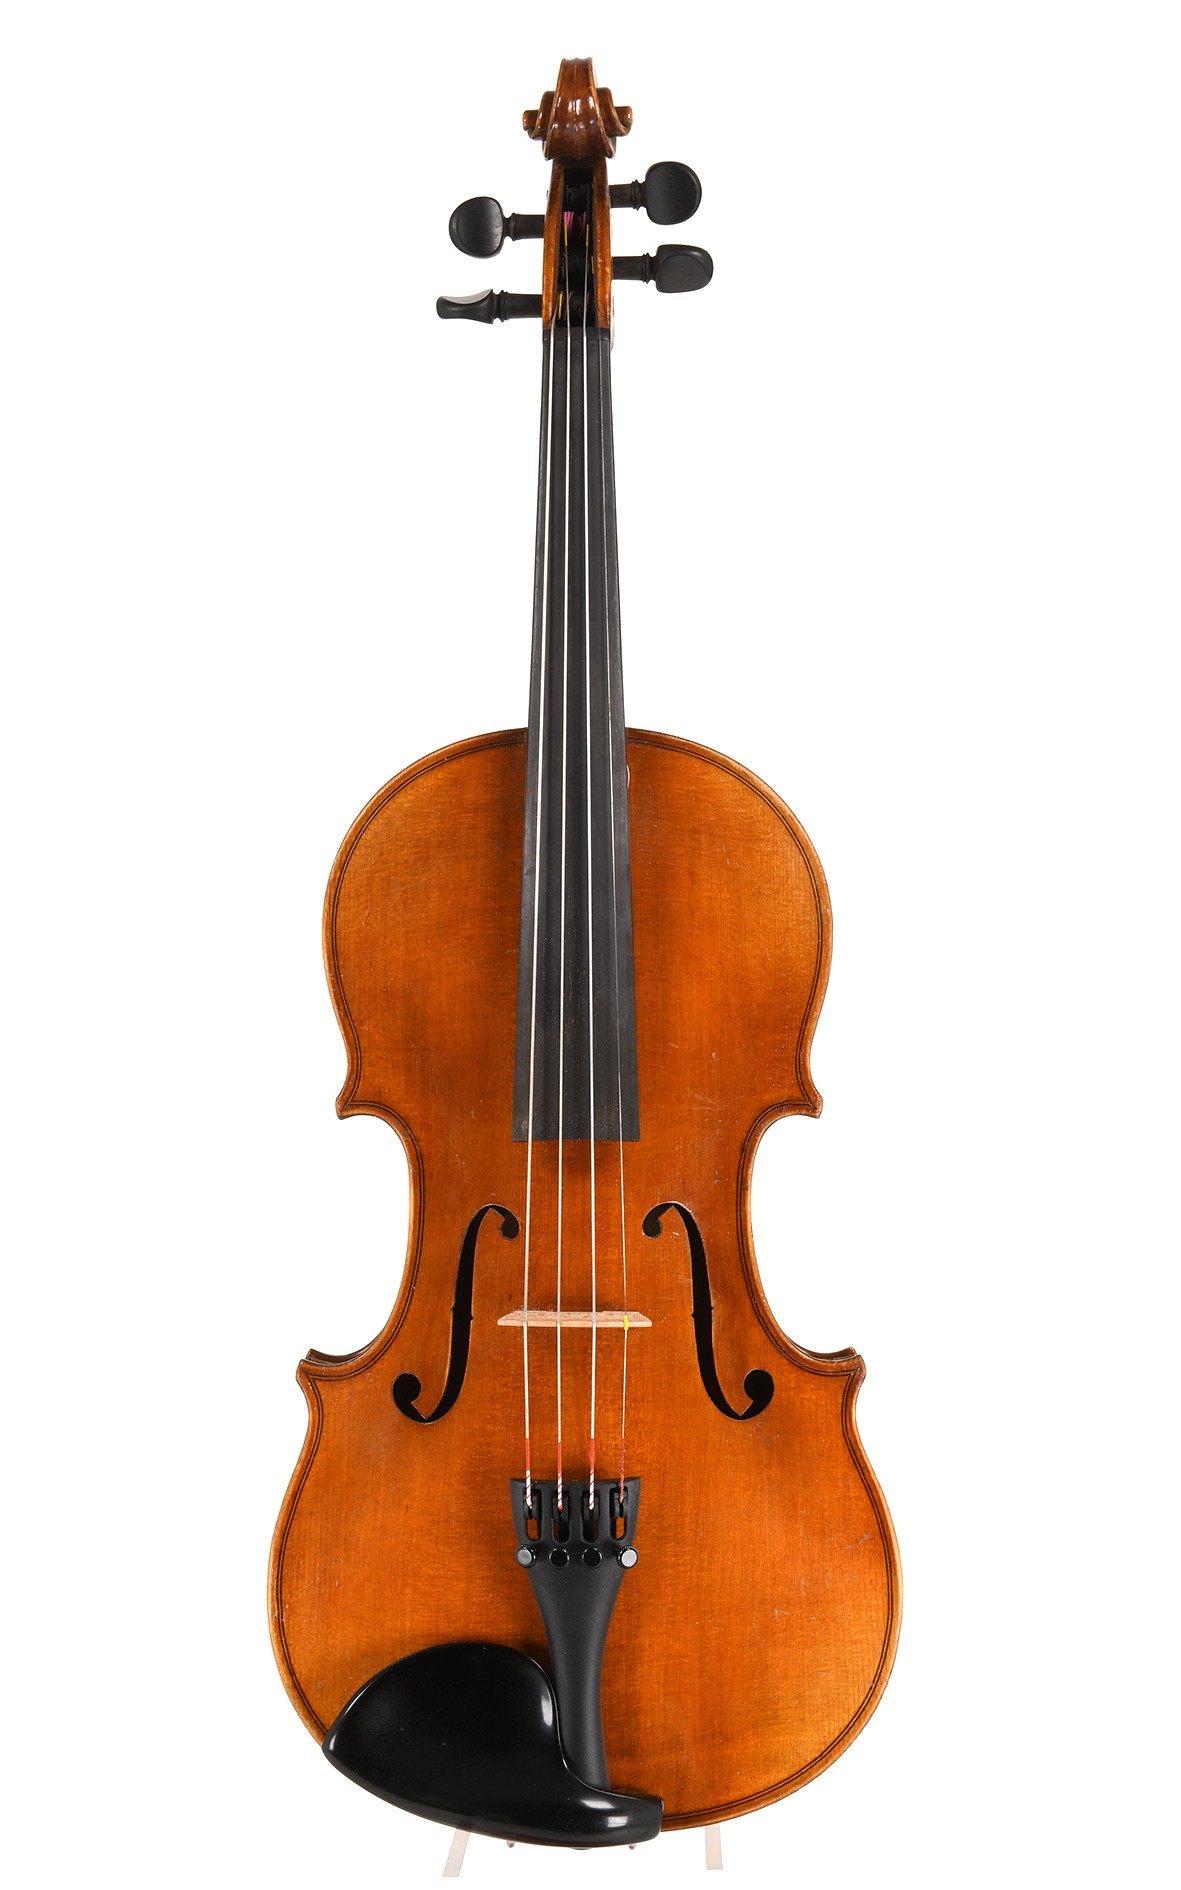 Markneukirchen 7/8 violin "Lady's violin", c.1940